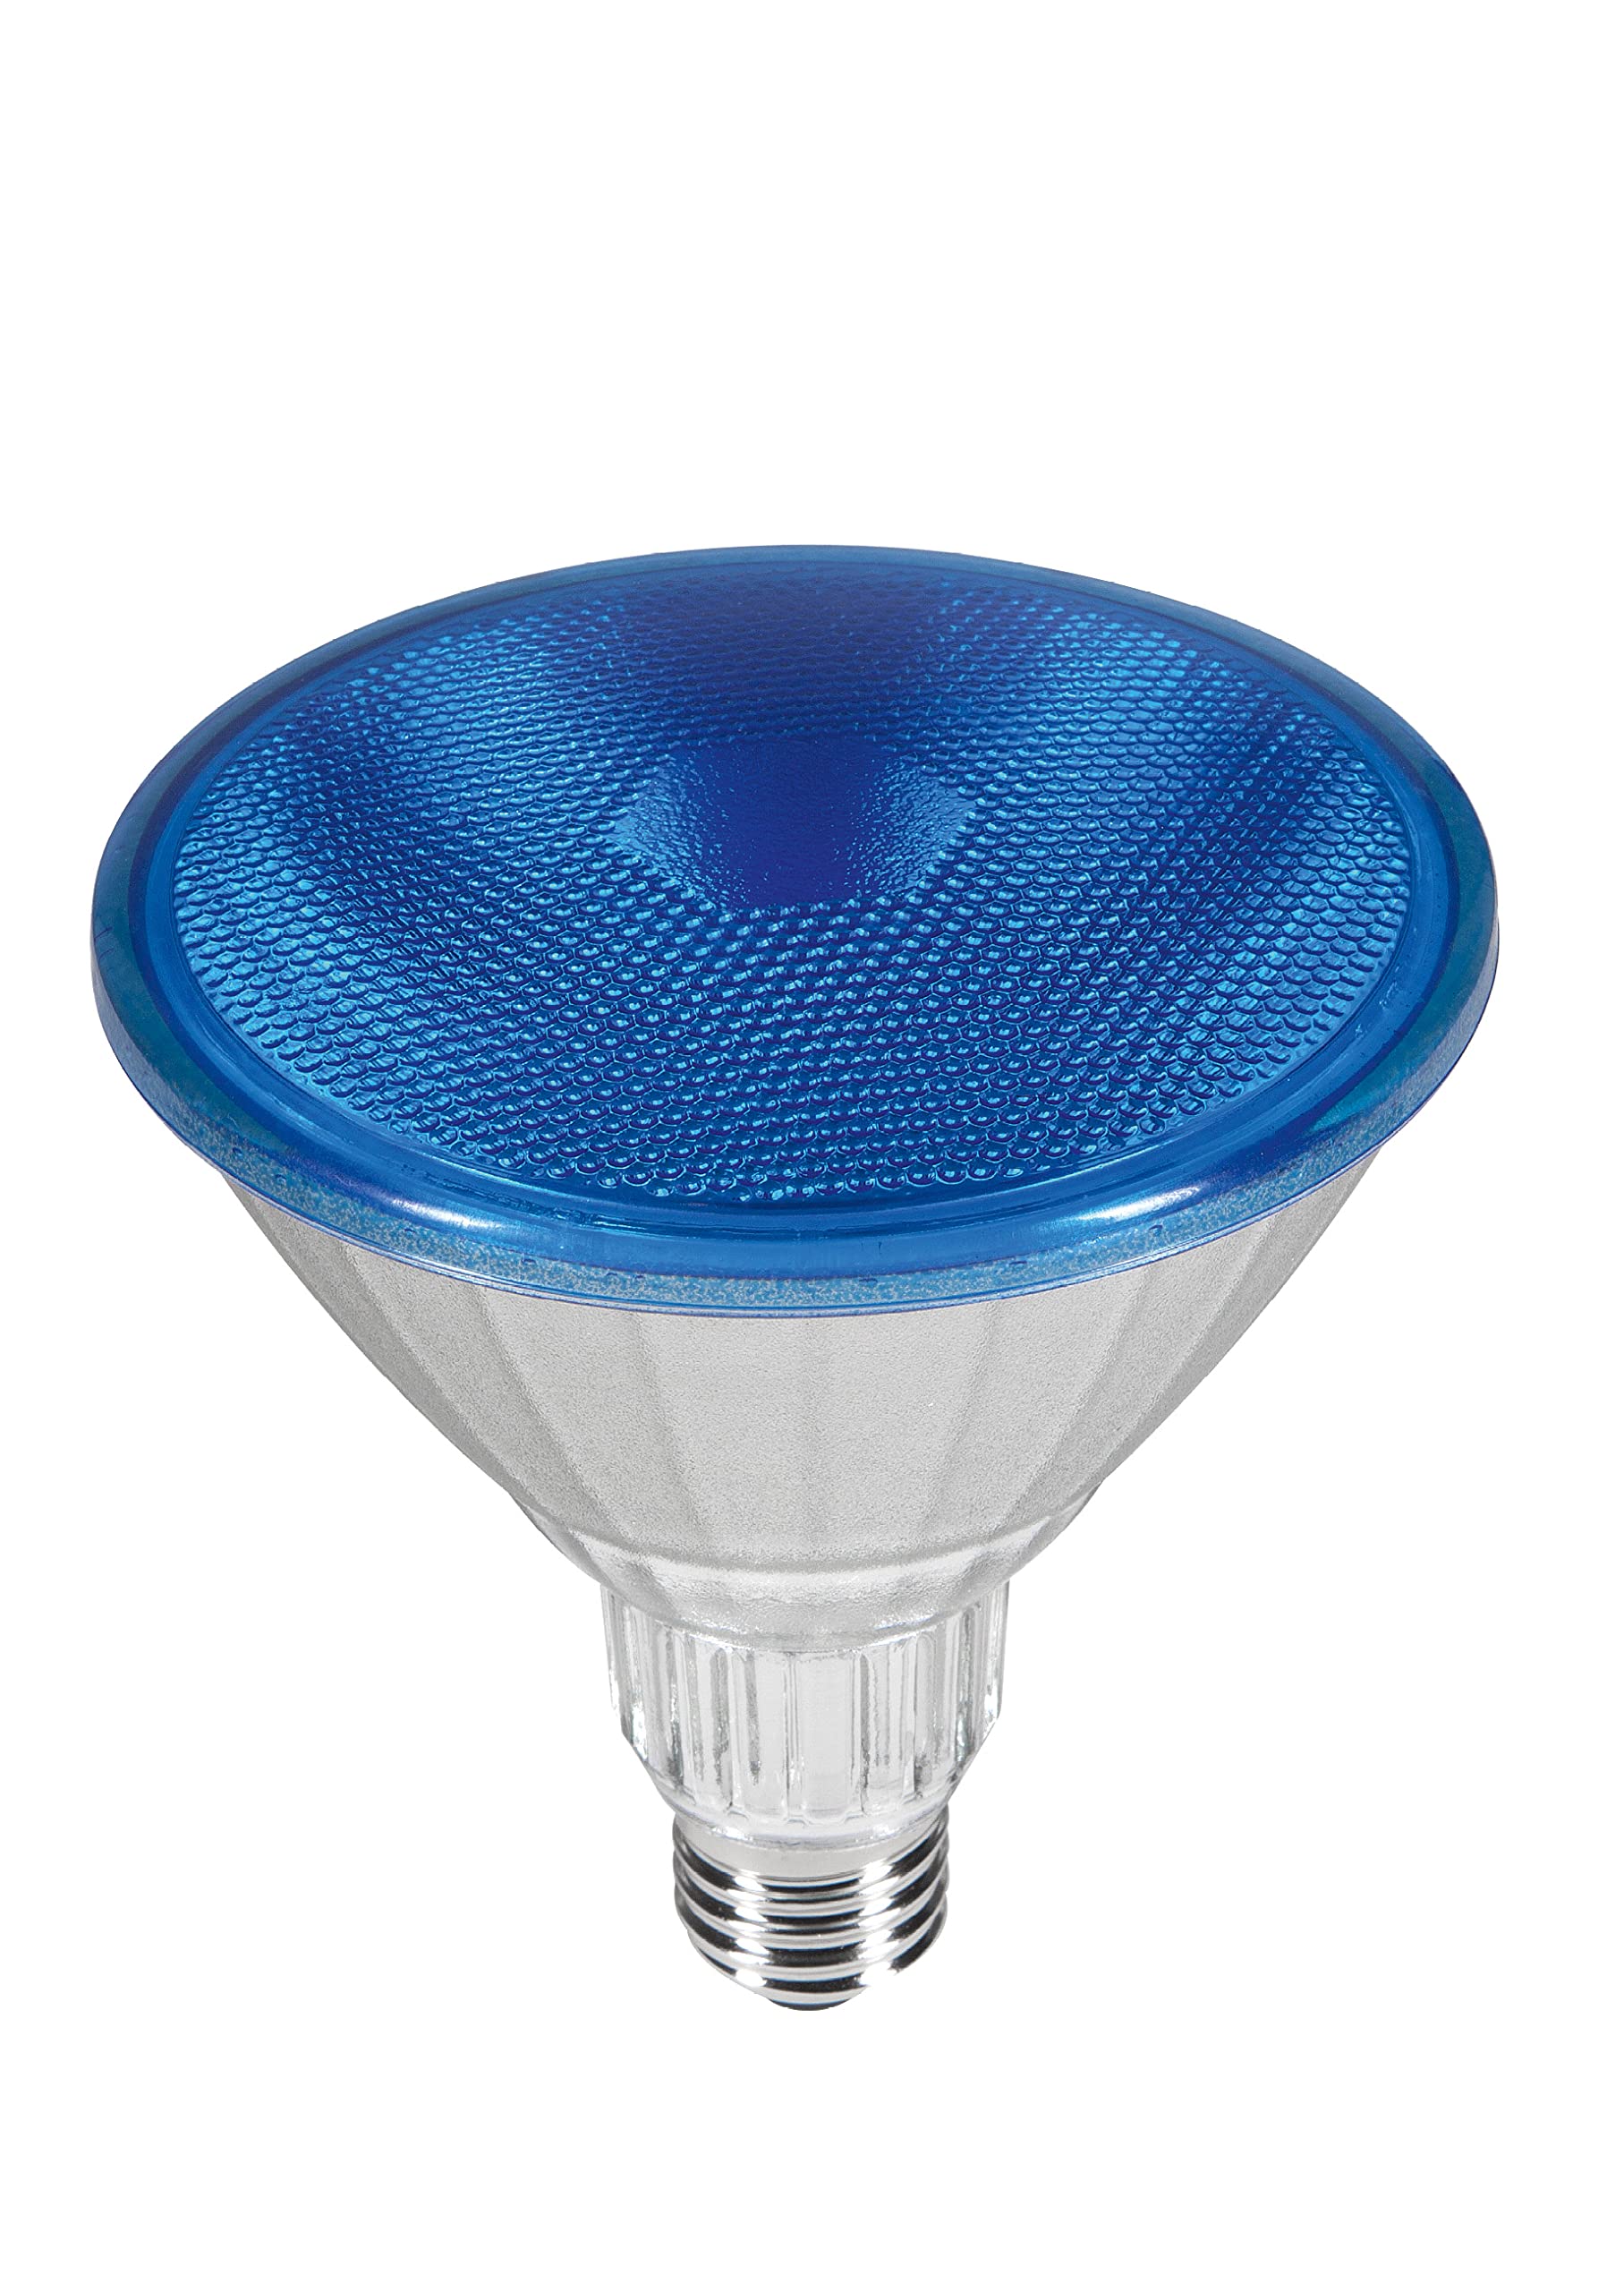 SEGULA LED Reflektor - PAR38 - IP65 - blau - nicht dimmbar - LED Außenbeleuchtung